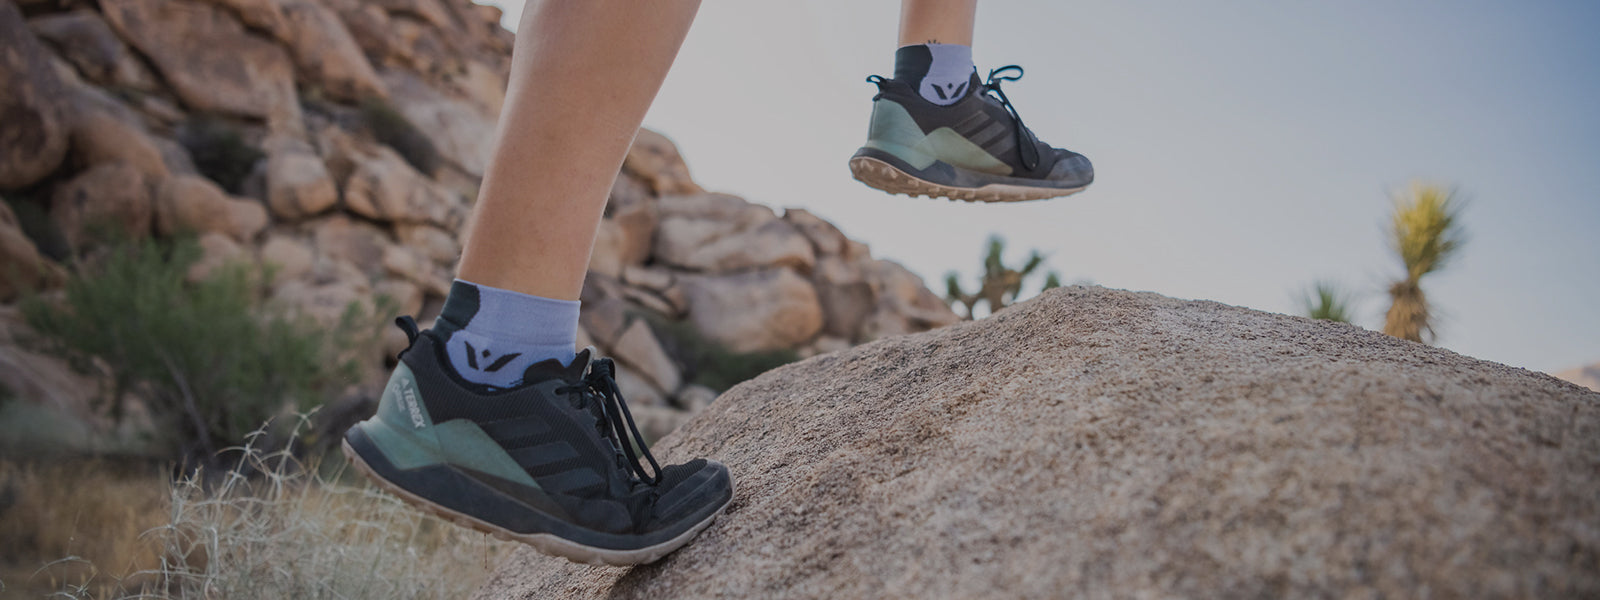 Swiftwick VIBE Socks header image, person trail running wearing VIBE One socks